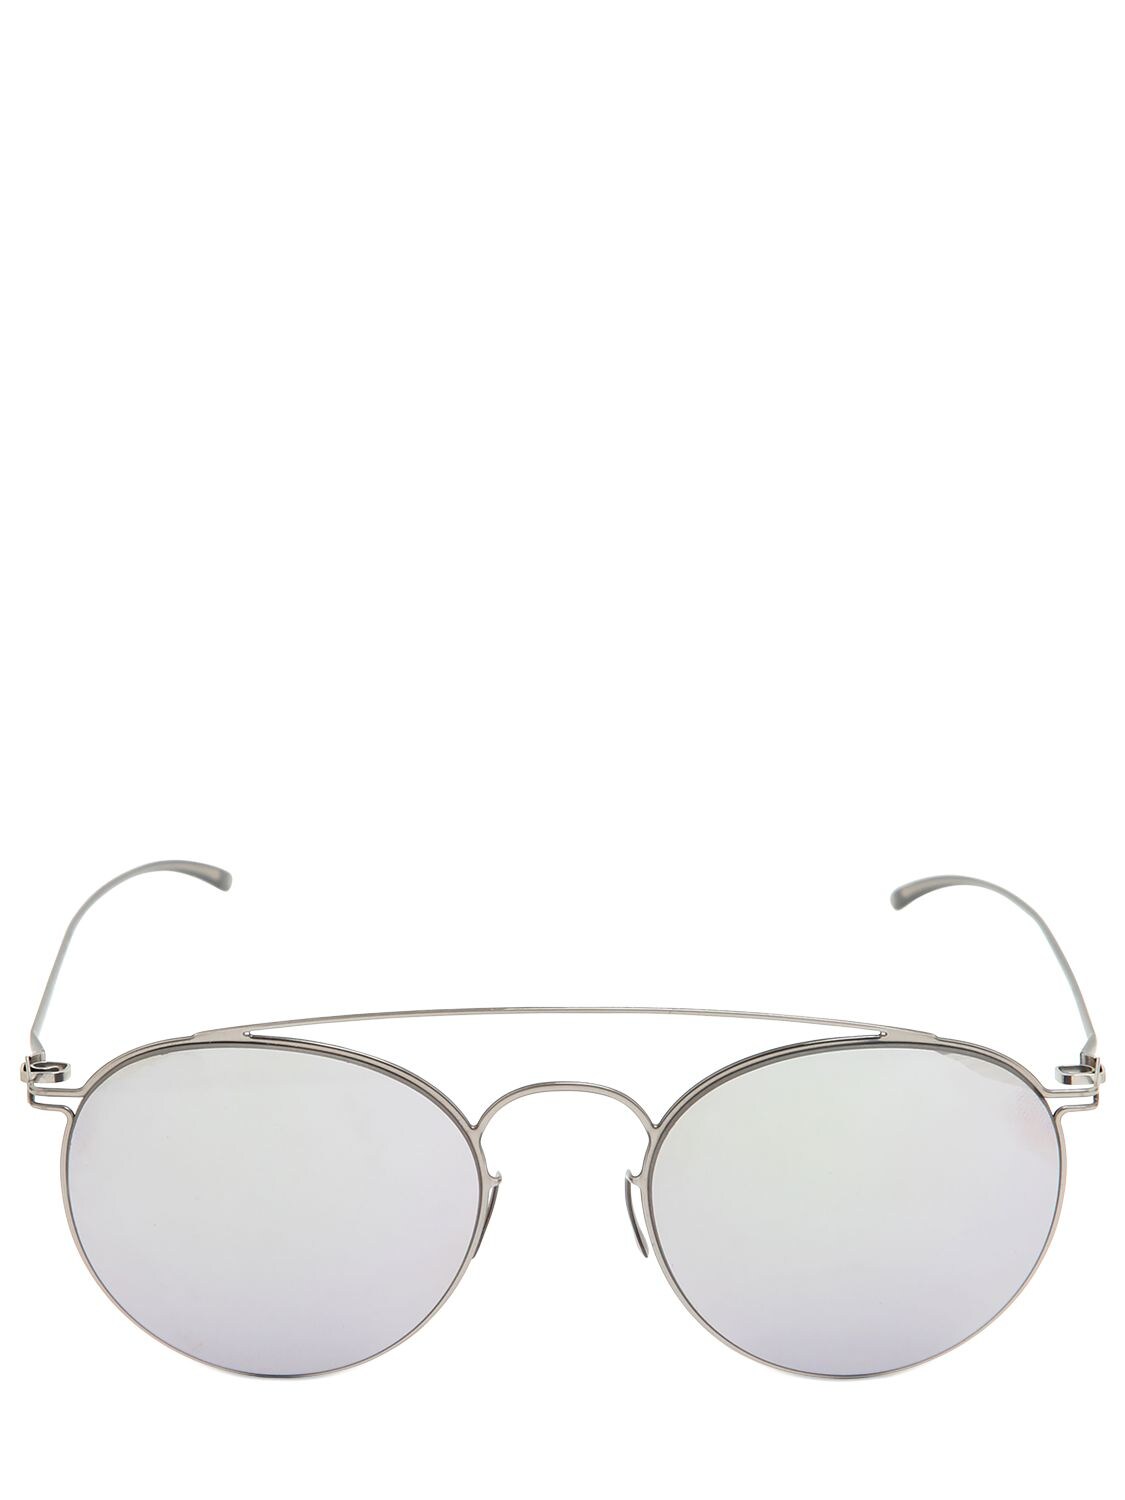 Mykita Margiela Aviator Mirrored Sunglasses In Silver